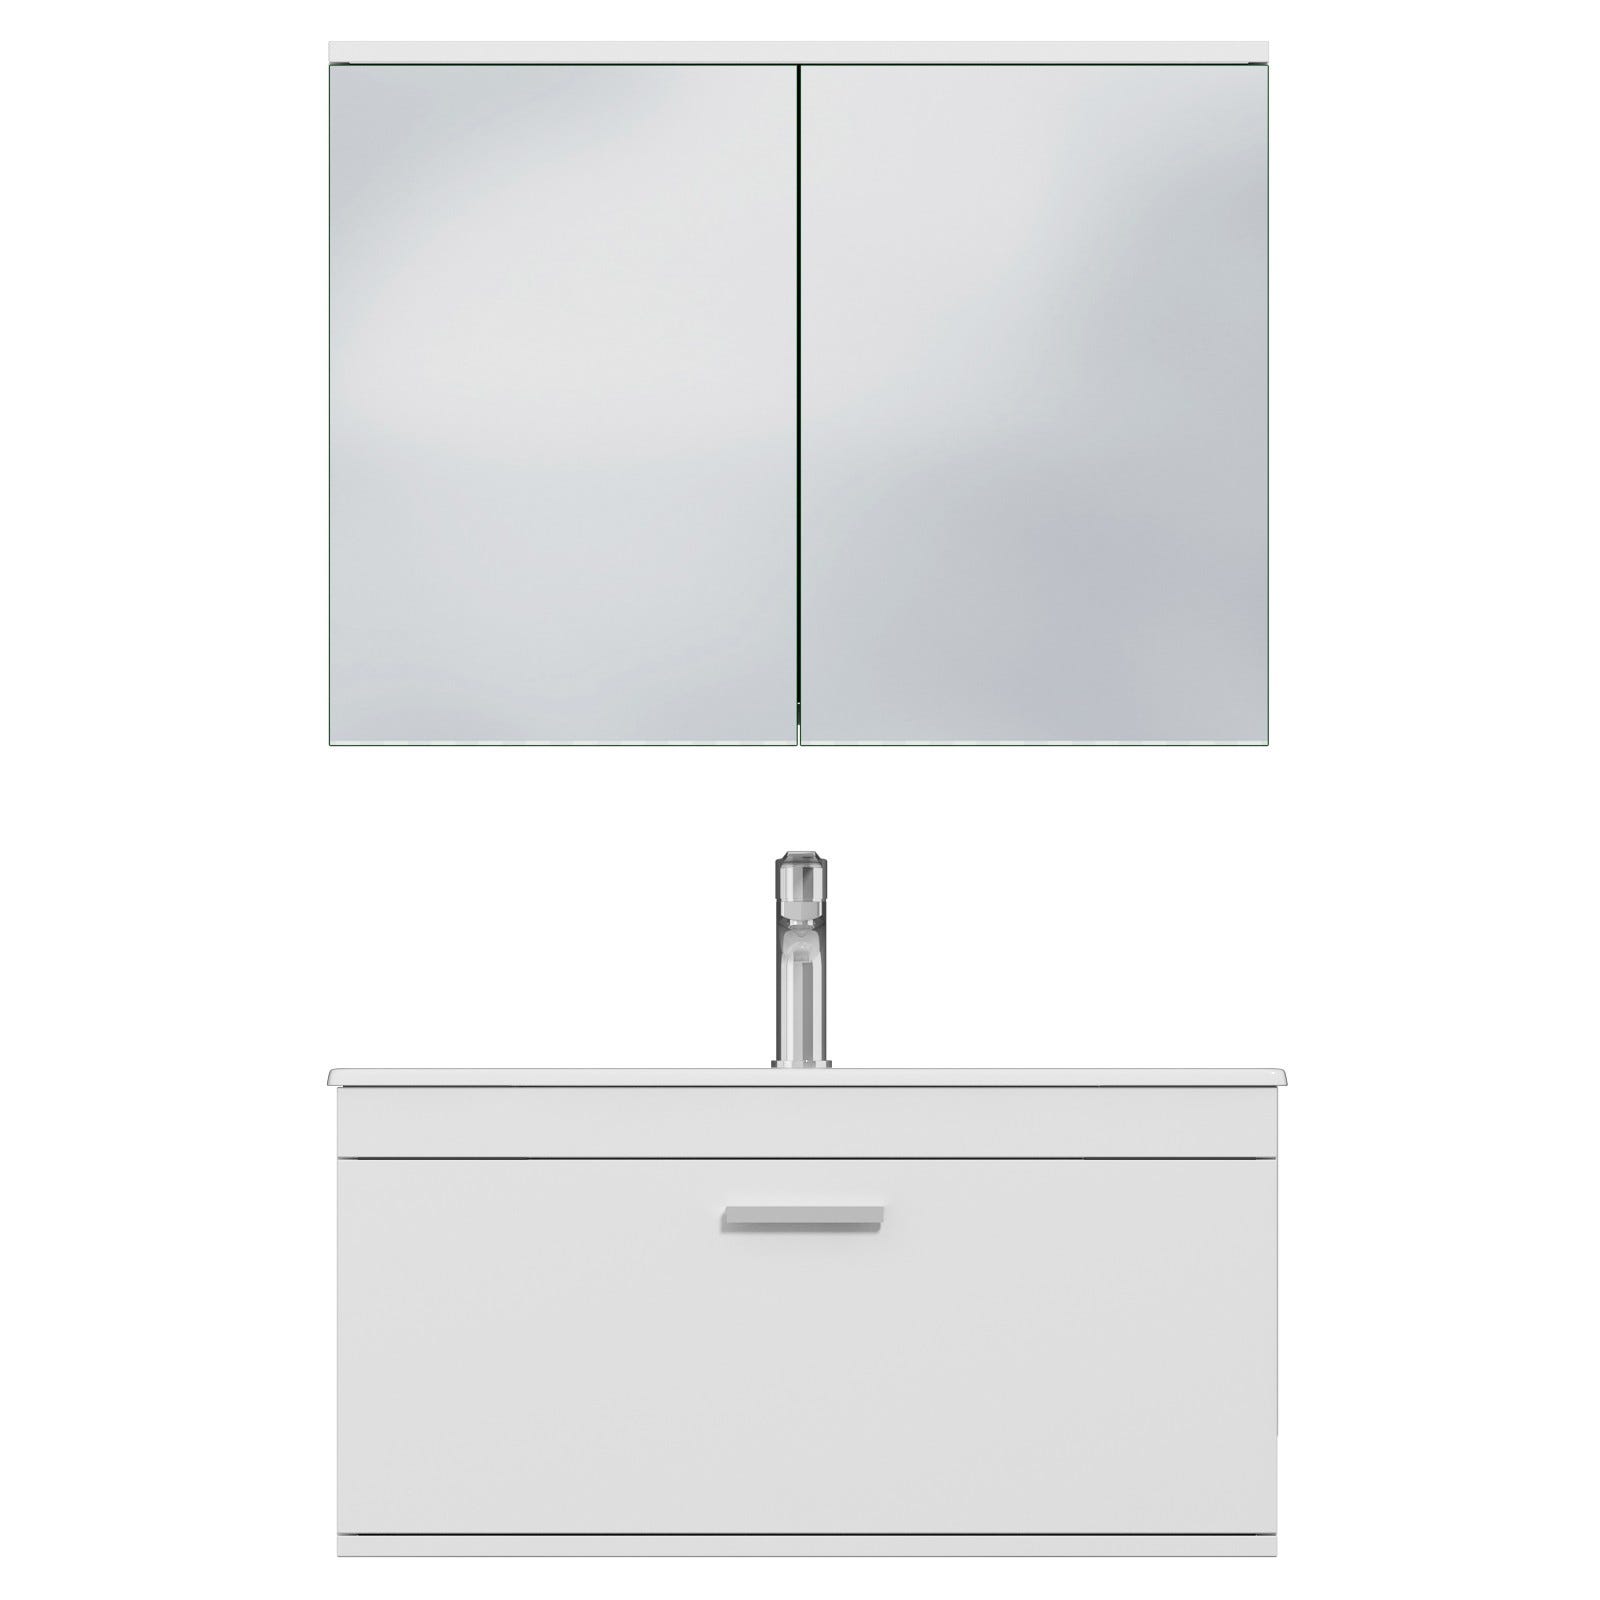 RUBITE Meuble salle de bain simple vasque 1 tiroir blanc largeur 80 cm + miroir armoire 4